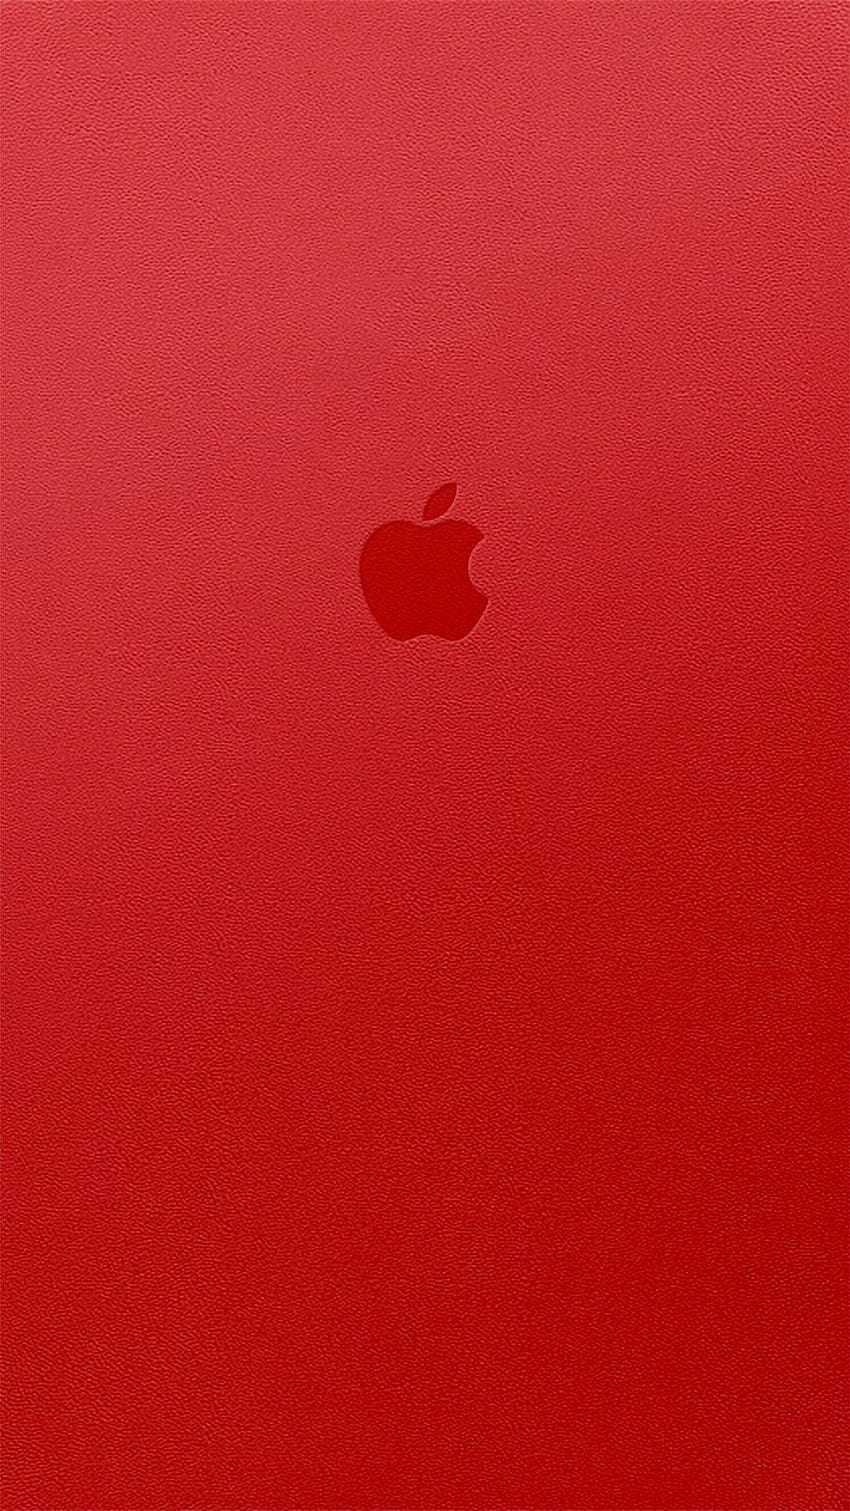 8 Iphone rojo, Apple iPhone 6 fondo de pantalla del teléfono